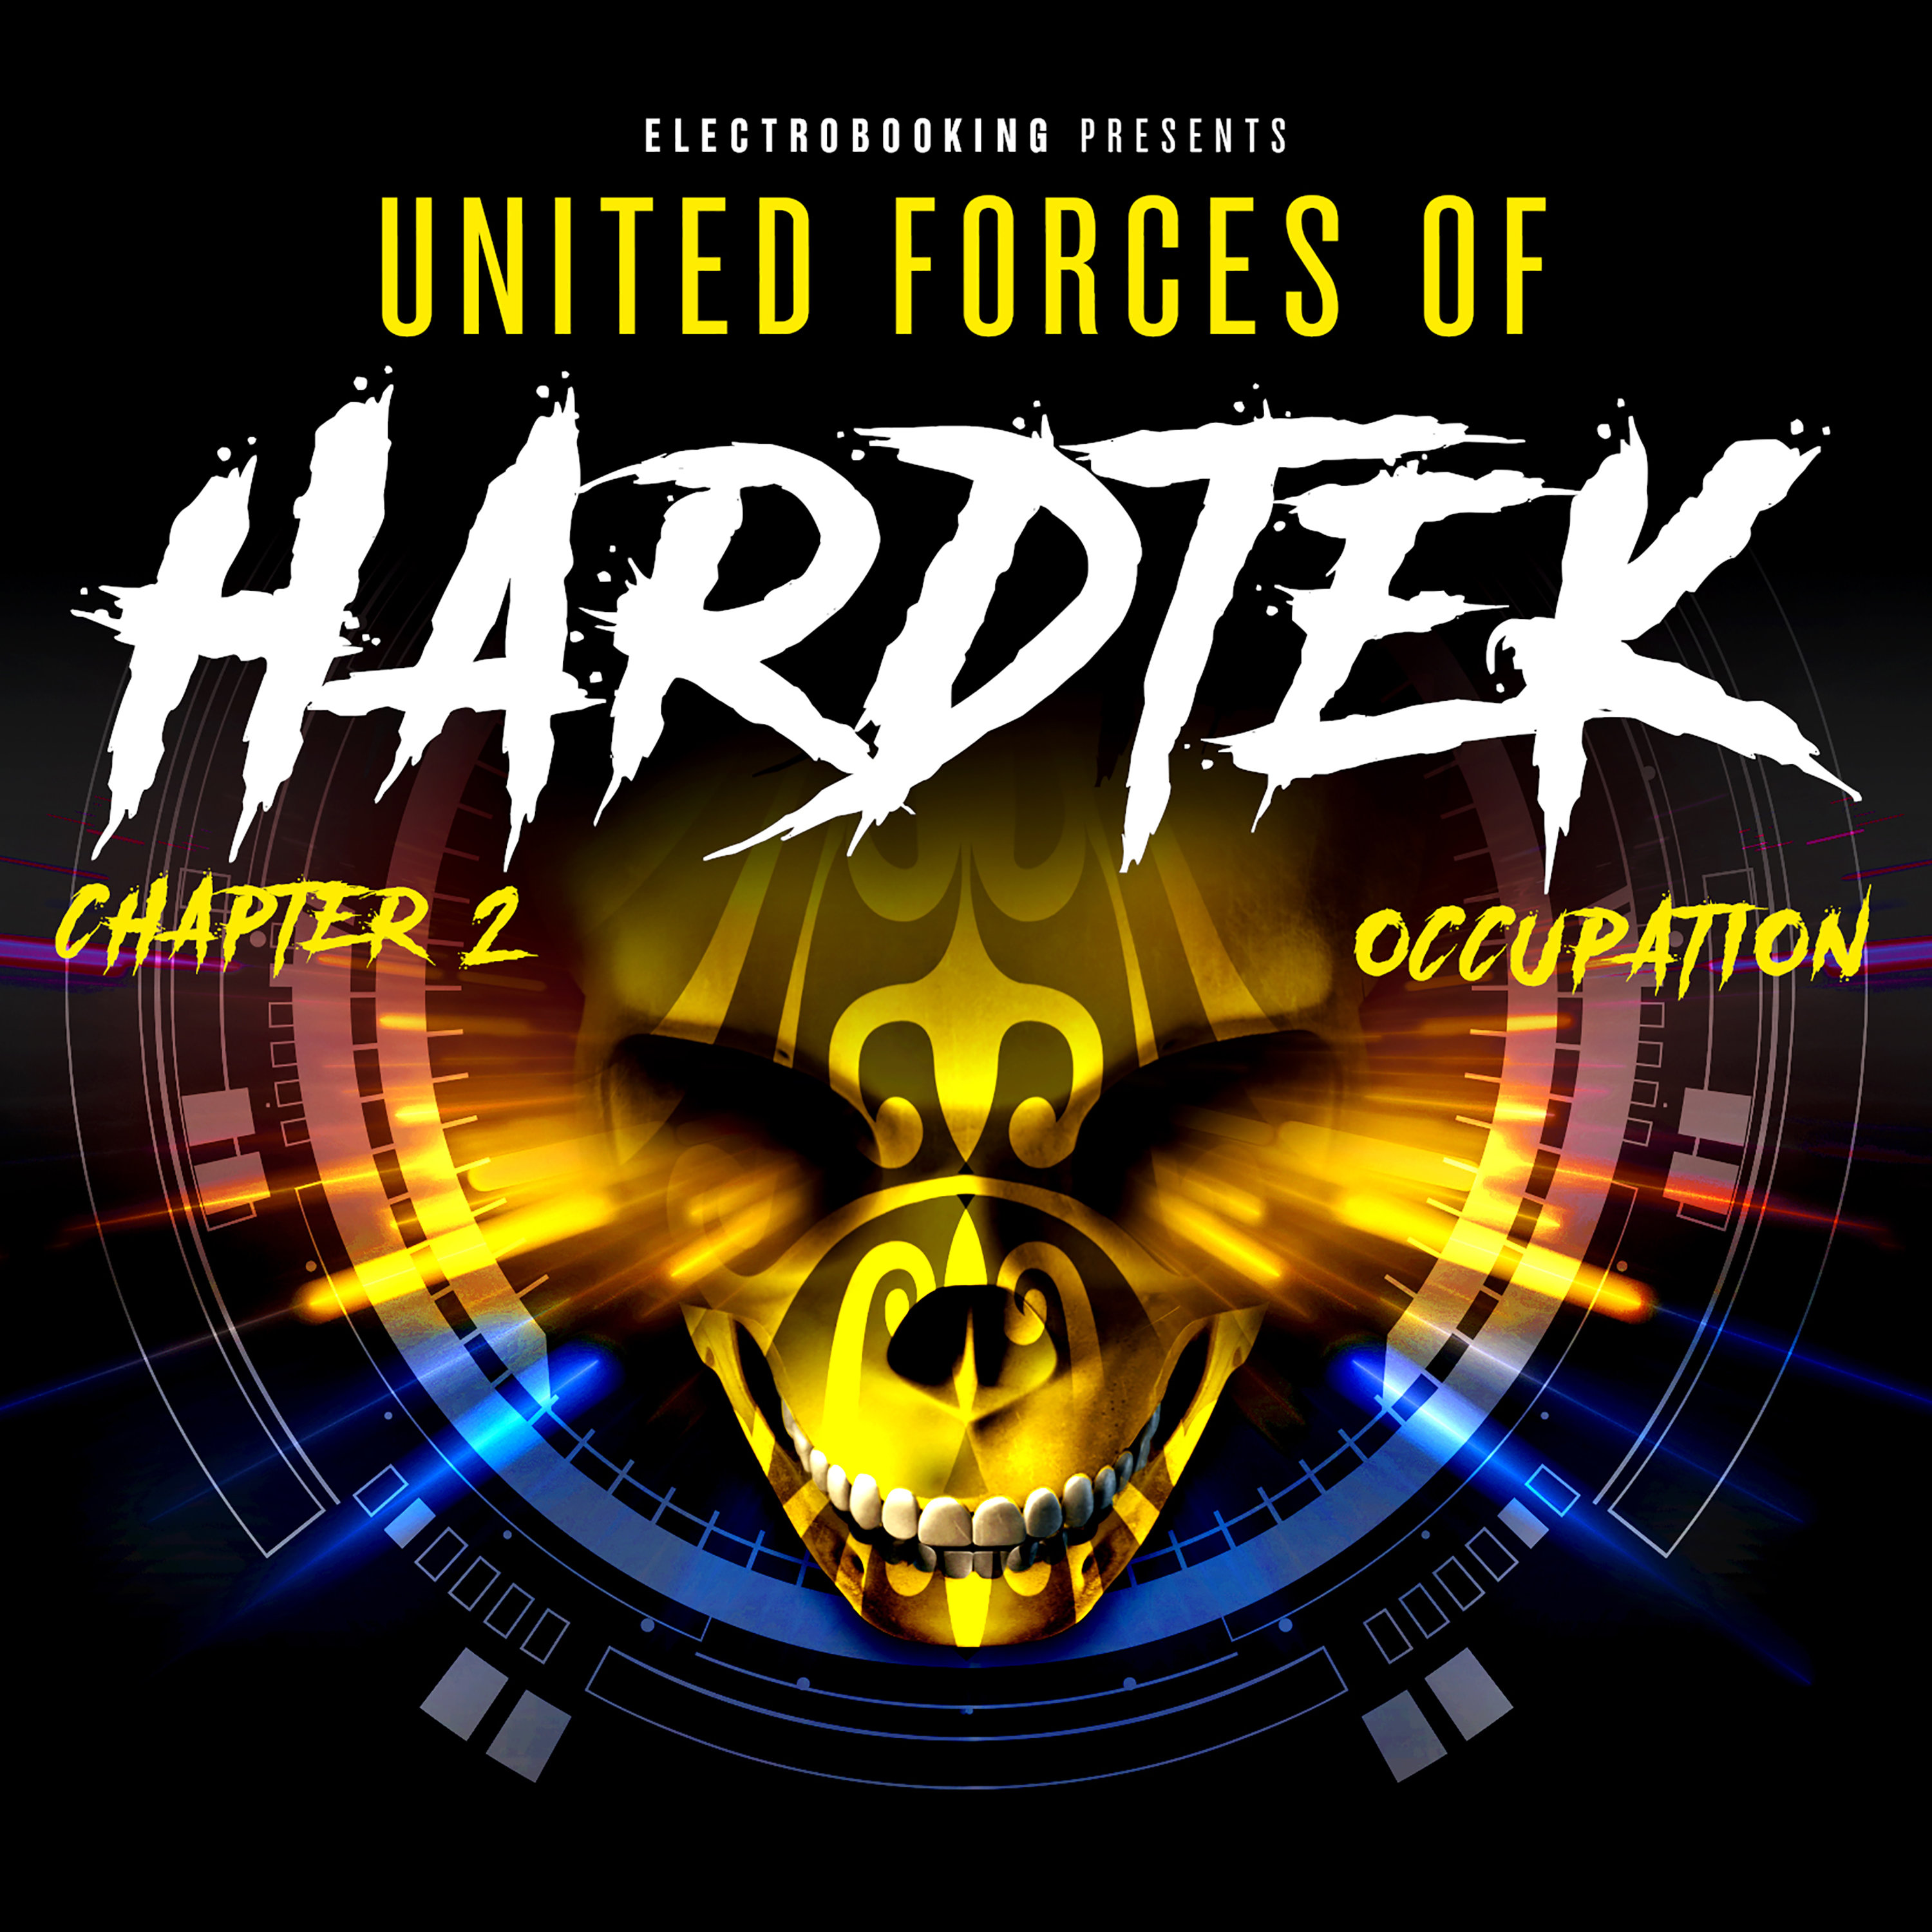 Electrobooking Presents United Forces of Hardtek, Chapter 2: Occupation (Mixed by Floxytek & Maissouille)